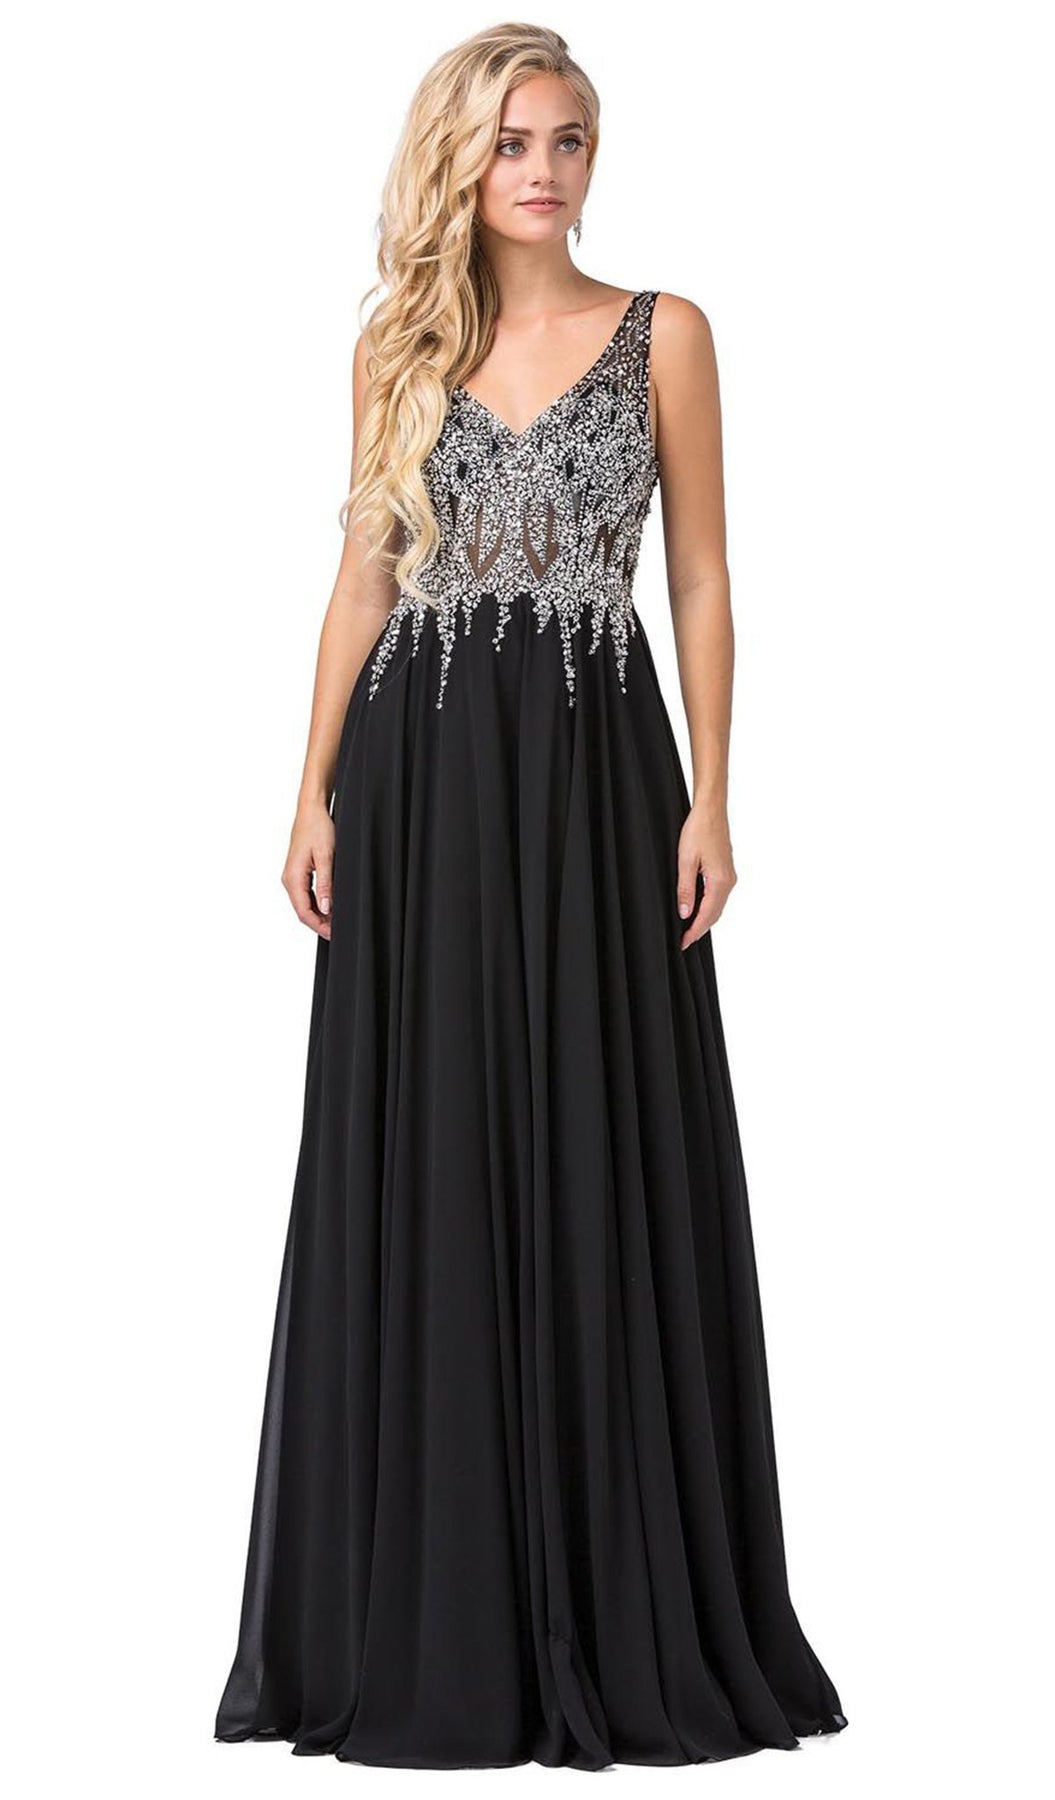 Dancing Queen - 2570 Jewel Ornate Illusion Bodice Chiffon Prom Dress In Black